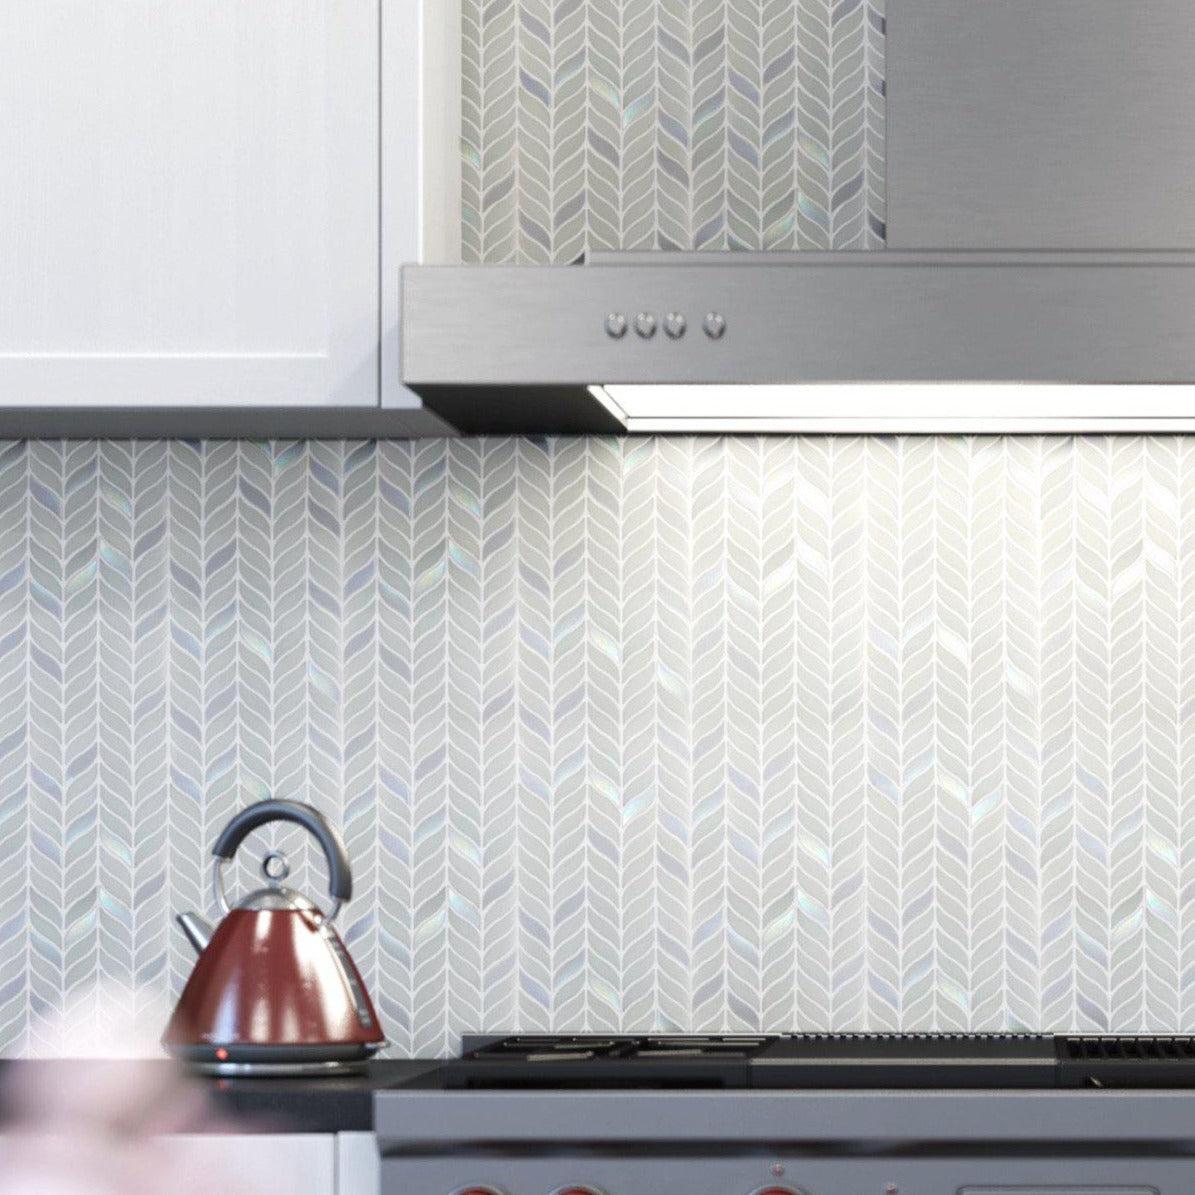 White and gray modern kitchen with white leaf patterned tile backsplash